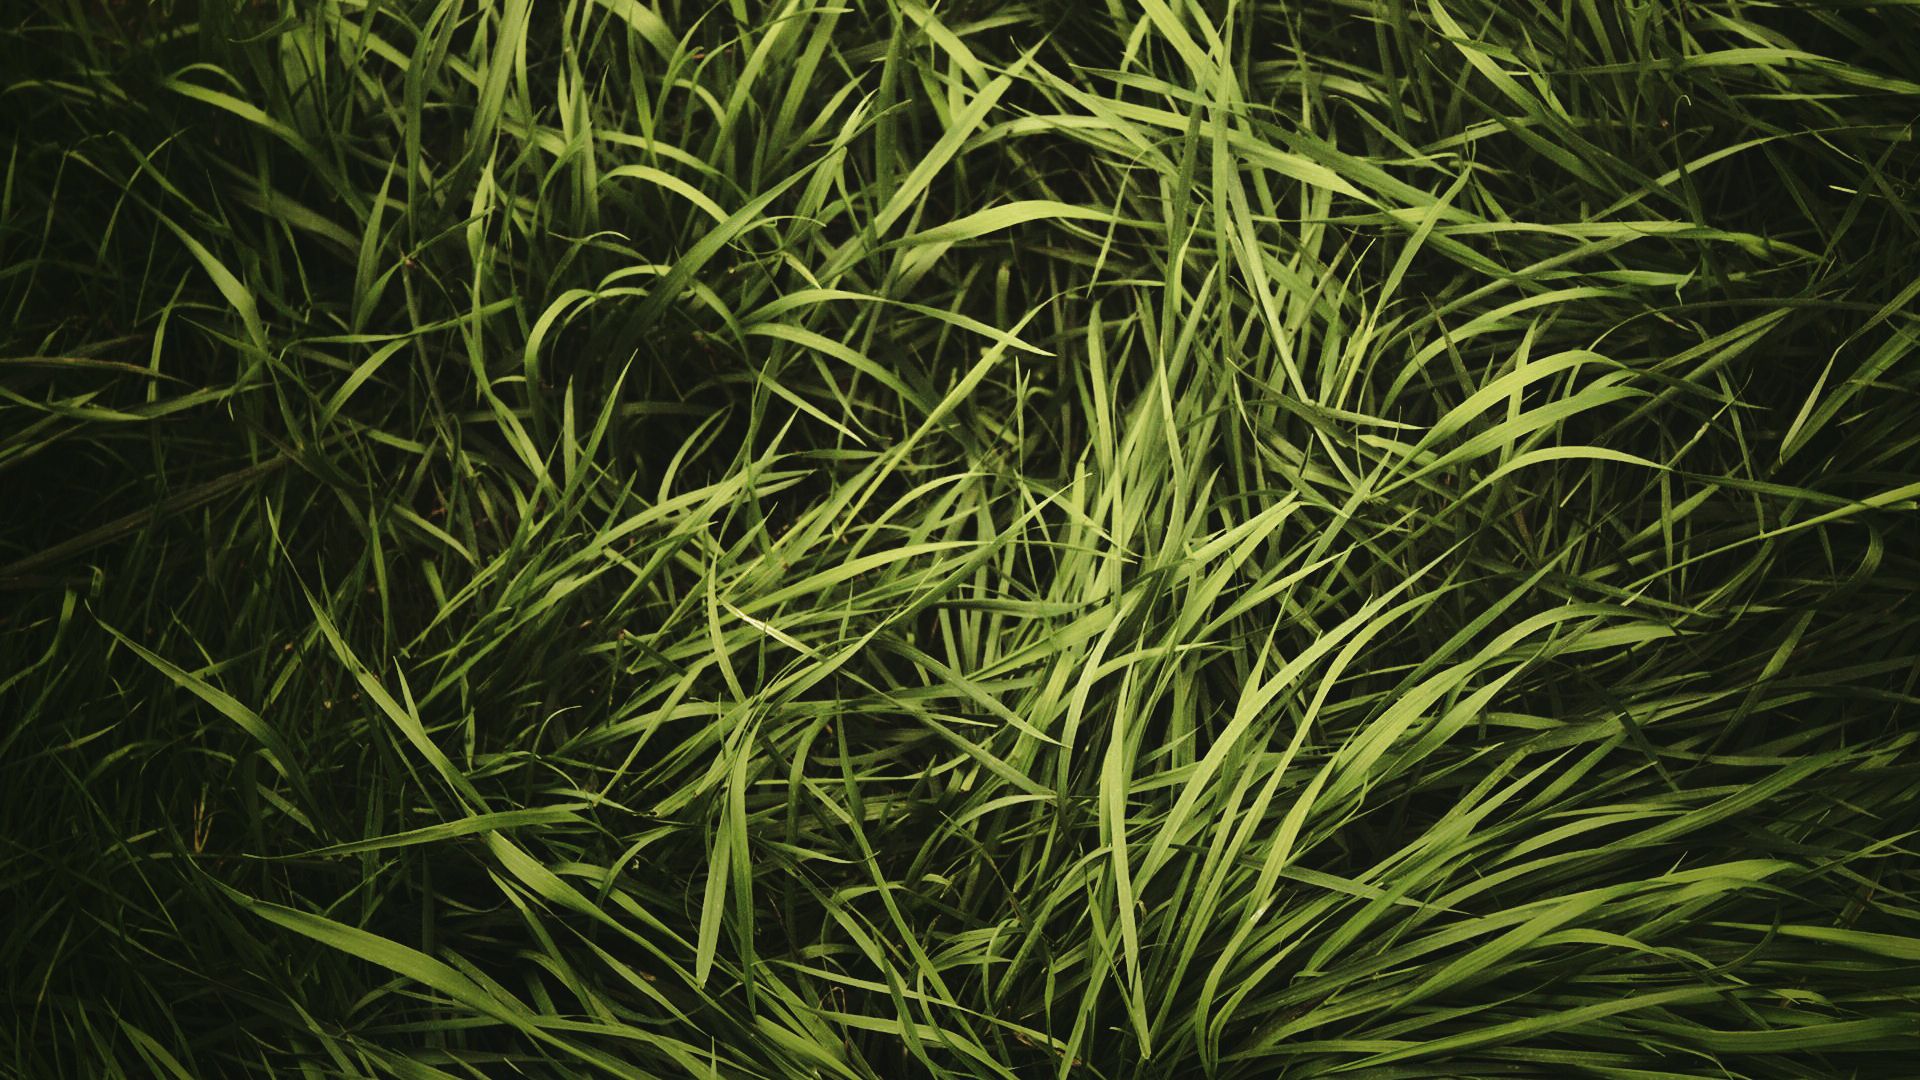 Desktop Wallpaper Green Grass Texture, HD Image, Picture, Background, Cbm271